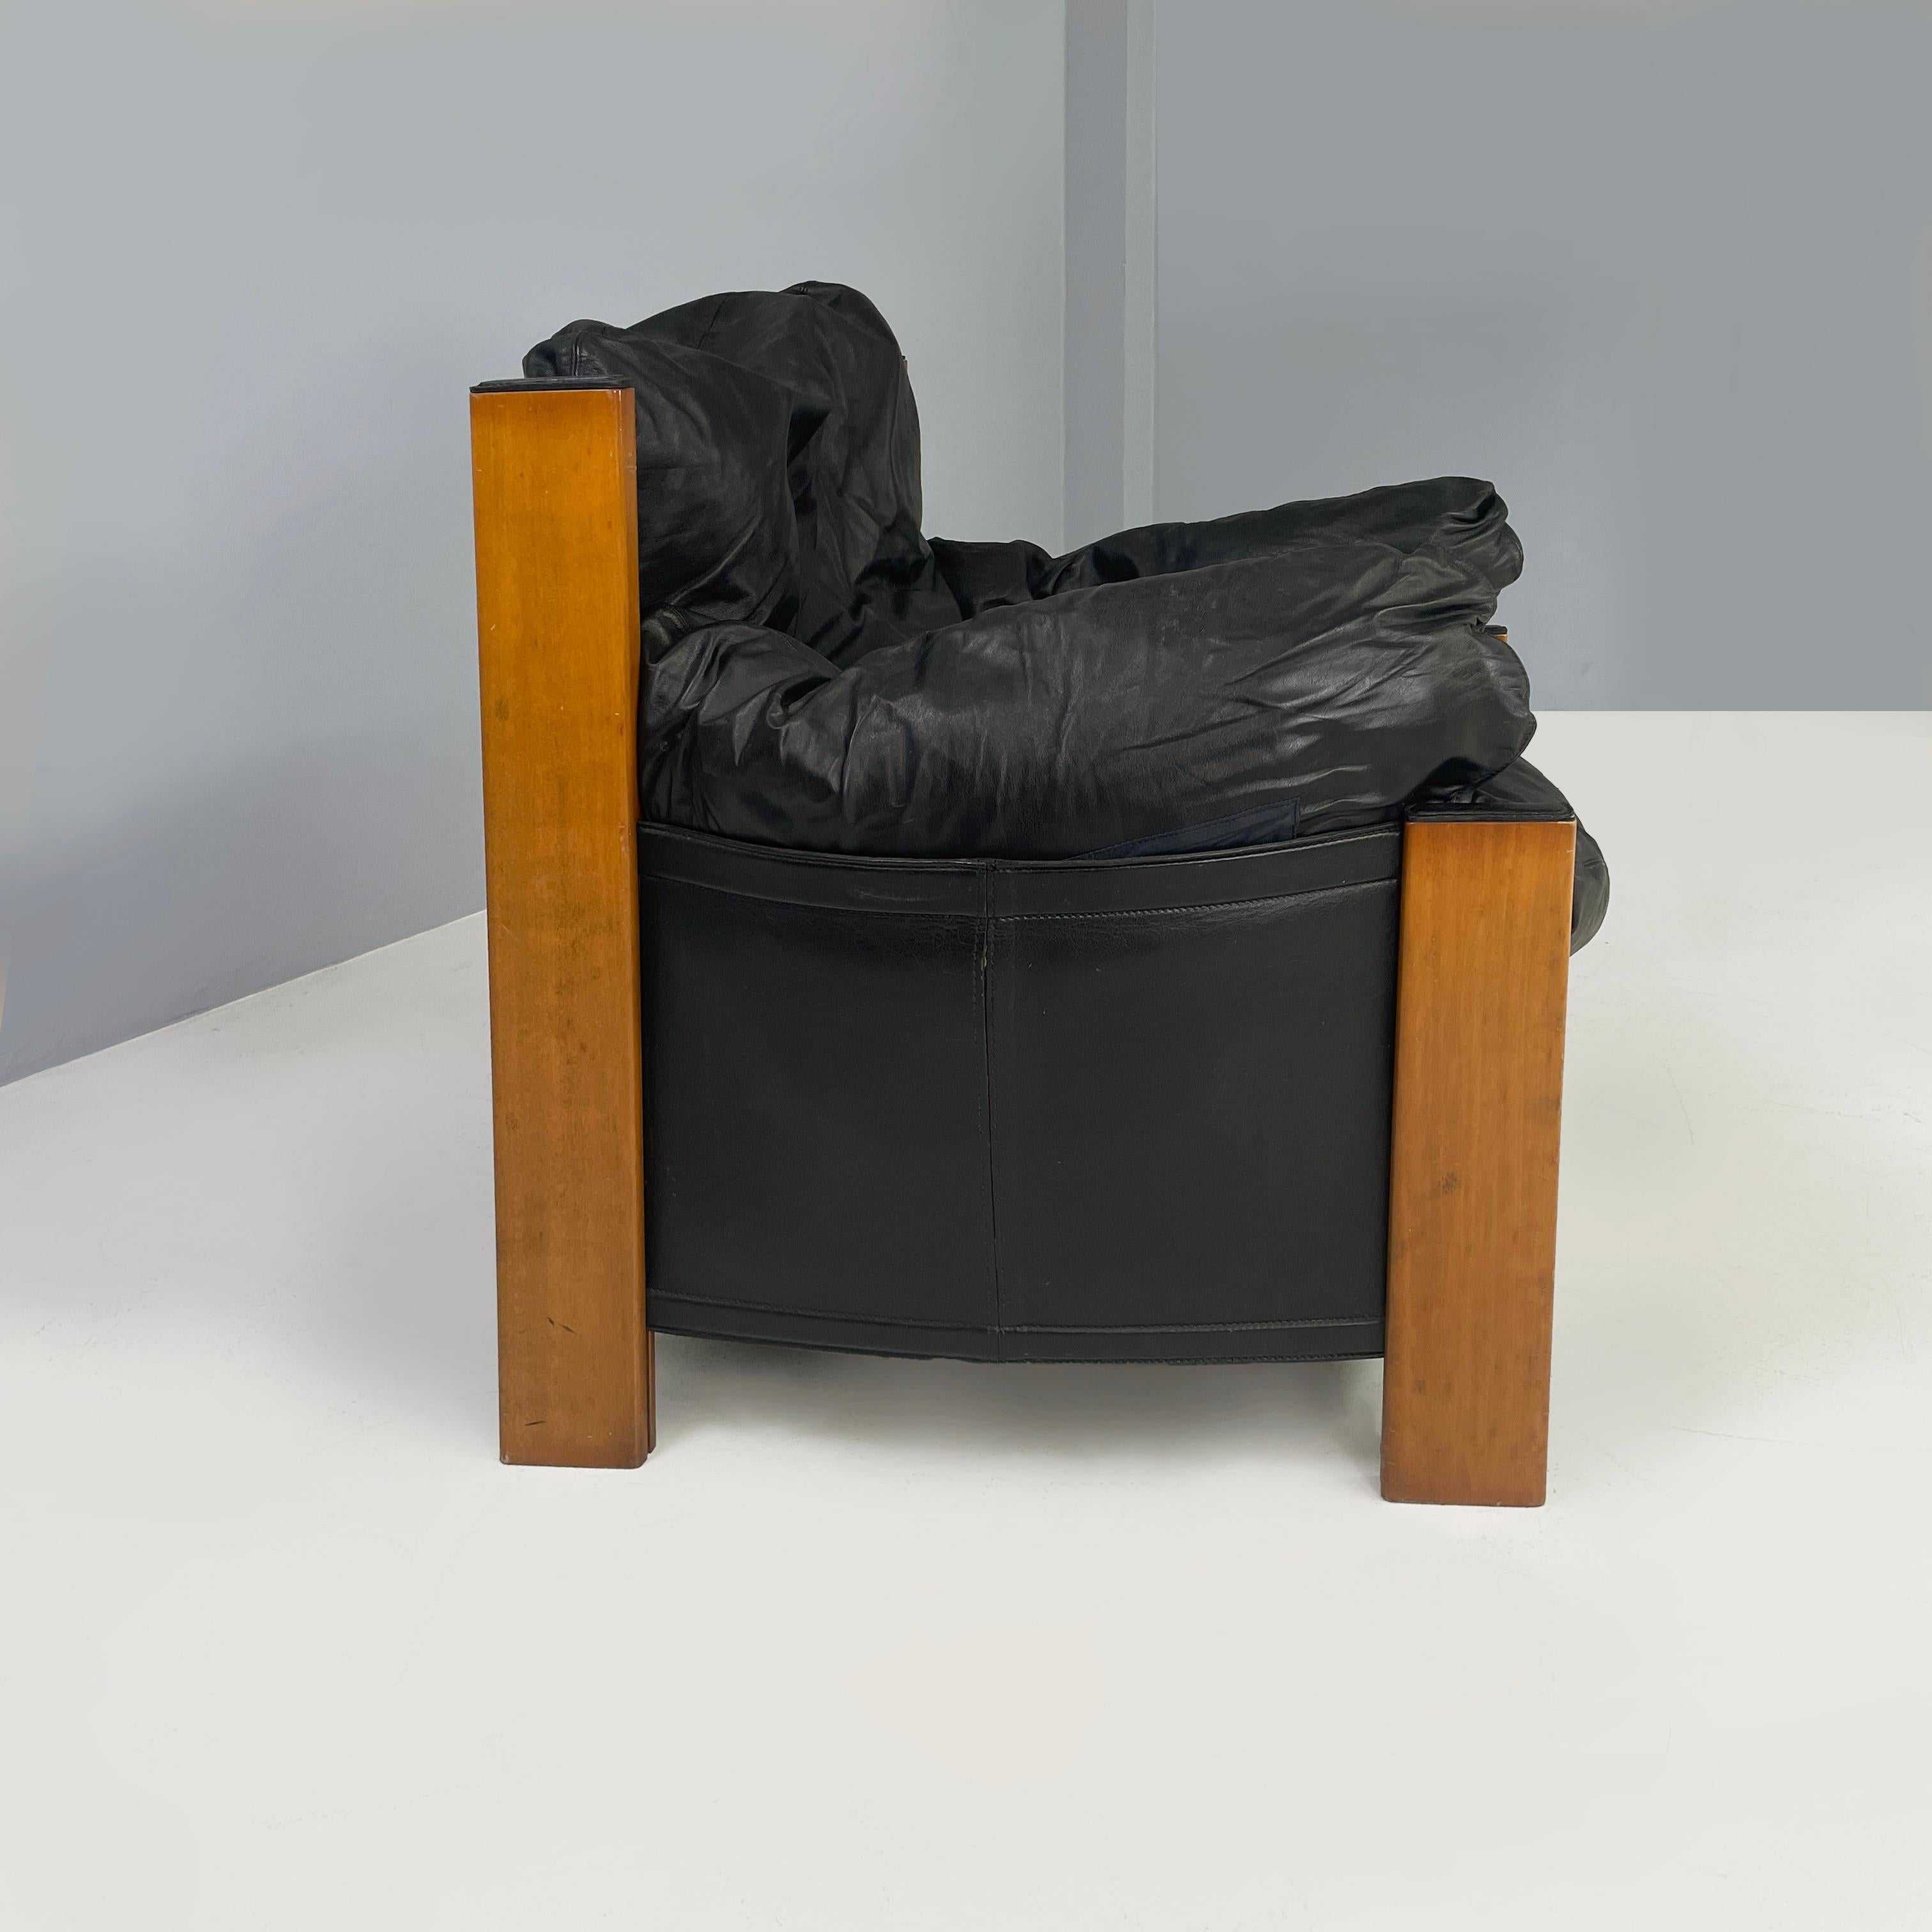 Leather Italian modern Black armchair Artona by Afra and Tobia Scarpa for Maxalto, 1970s For Sale